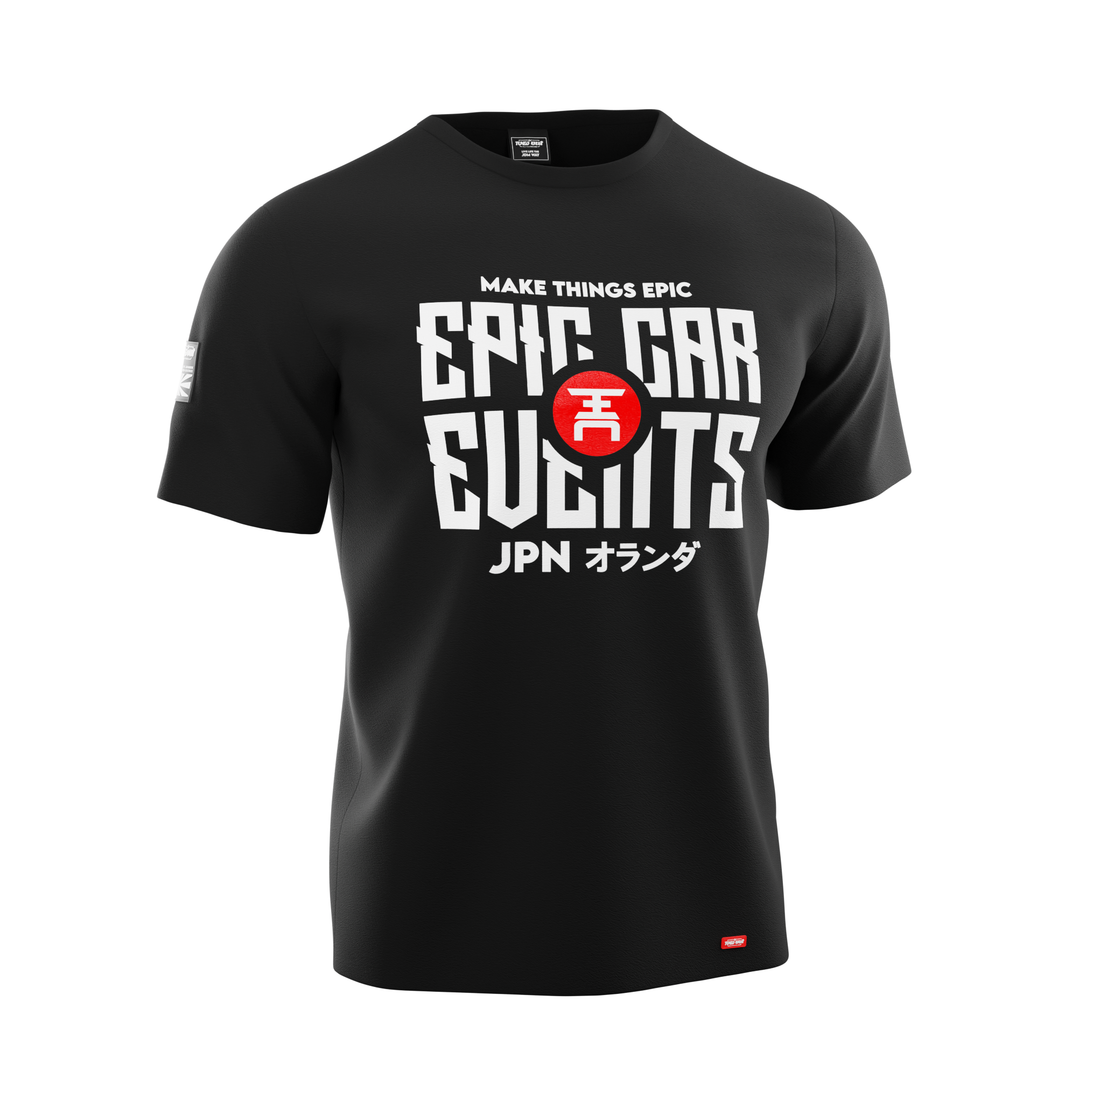 Epic Car Events T-Shirt Black